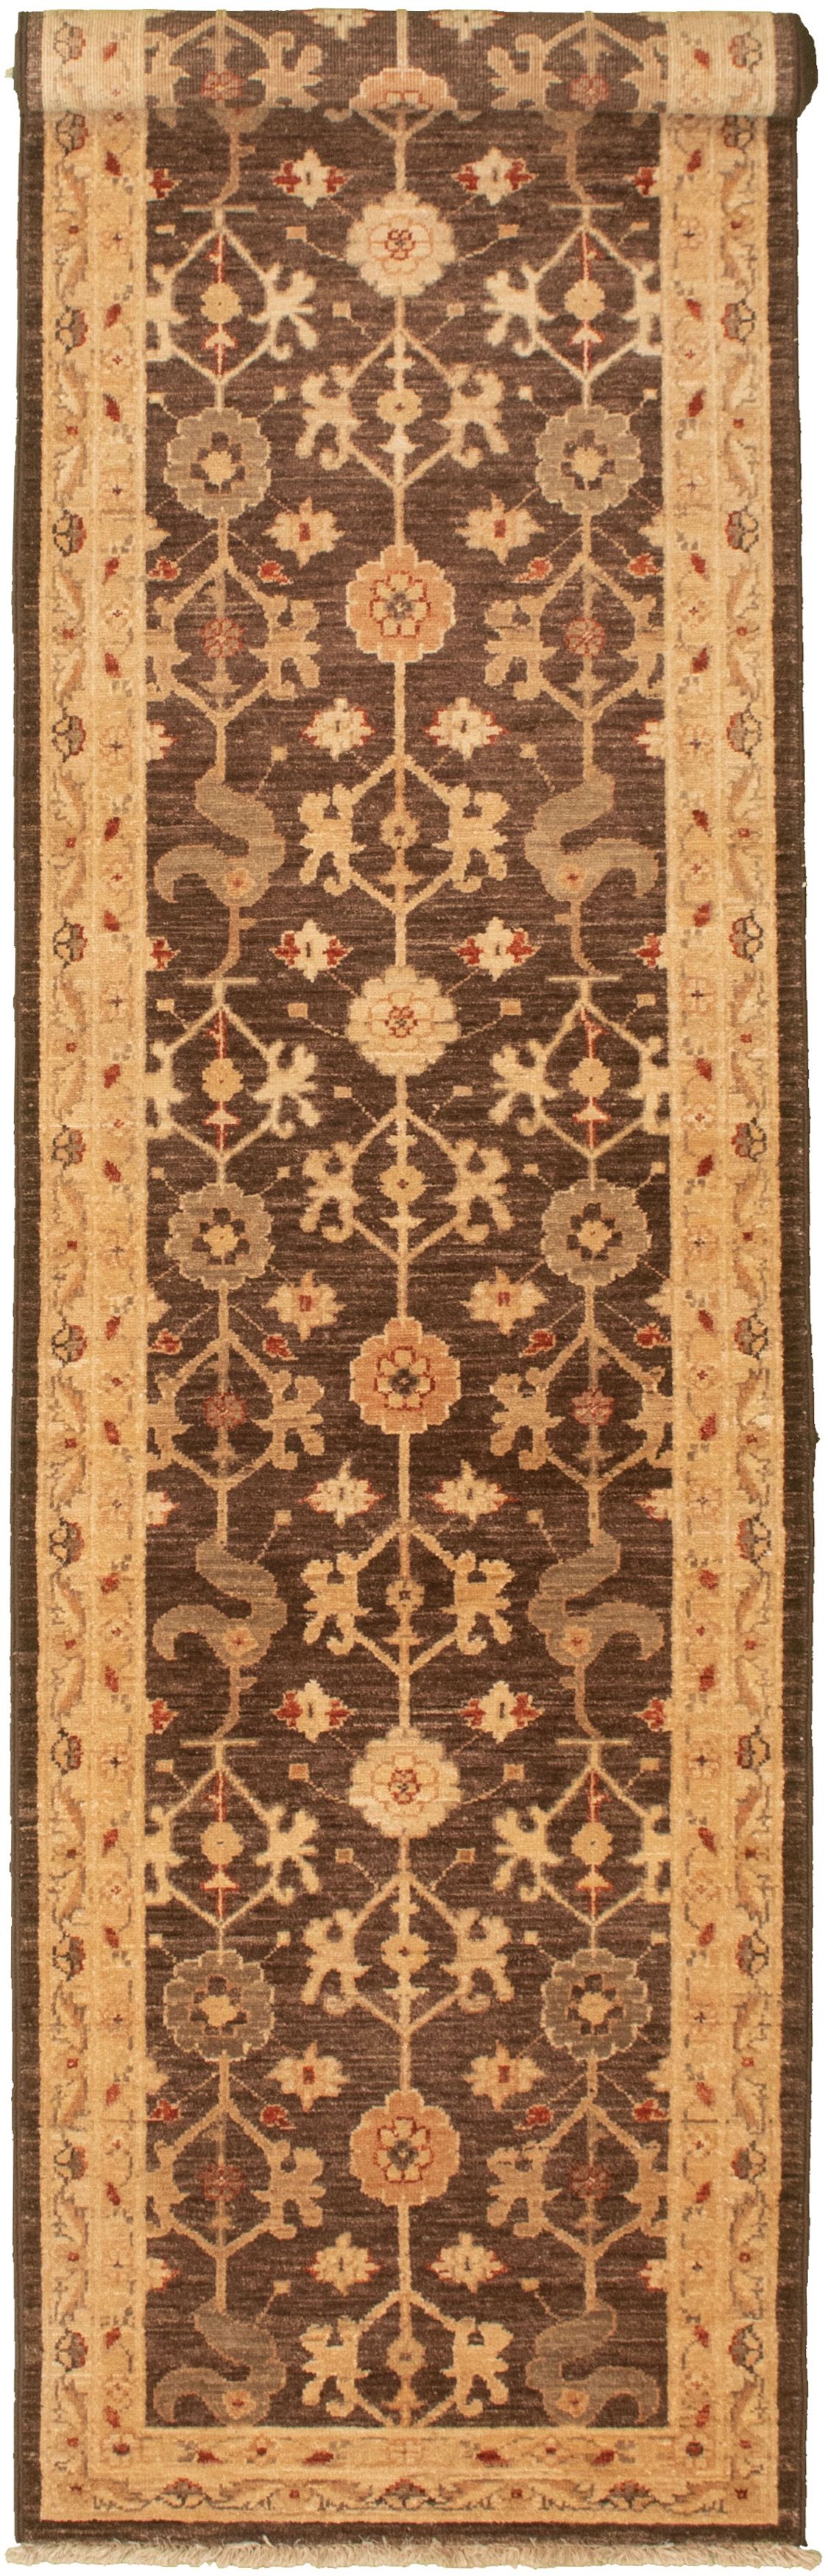 Hand-knotted Chobi Finest Dark Brown Wool Rug 2'6" x 11'8" Size: 2'6" x 11'8"  